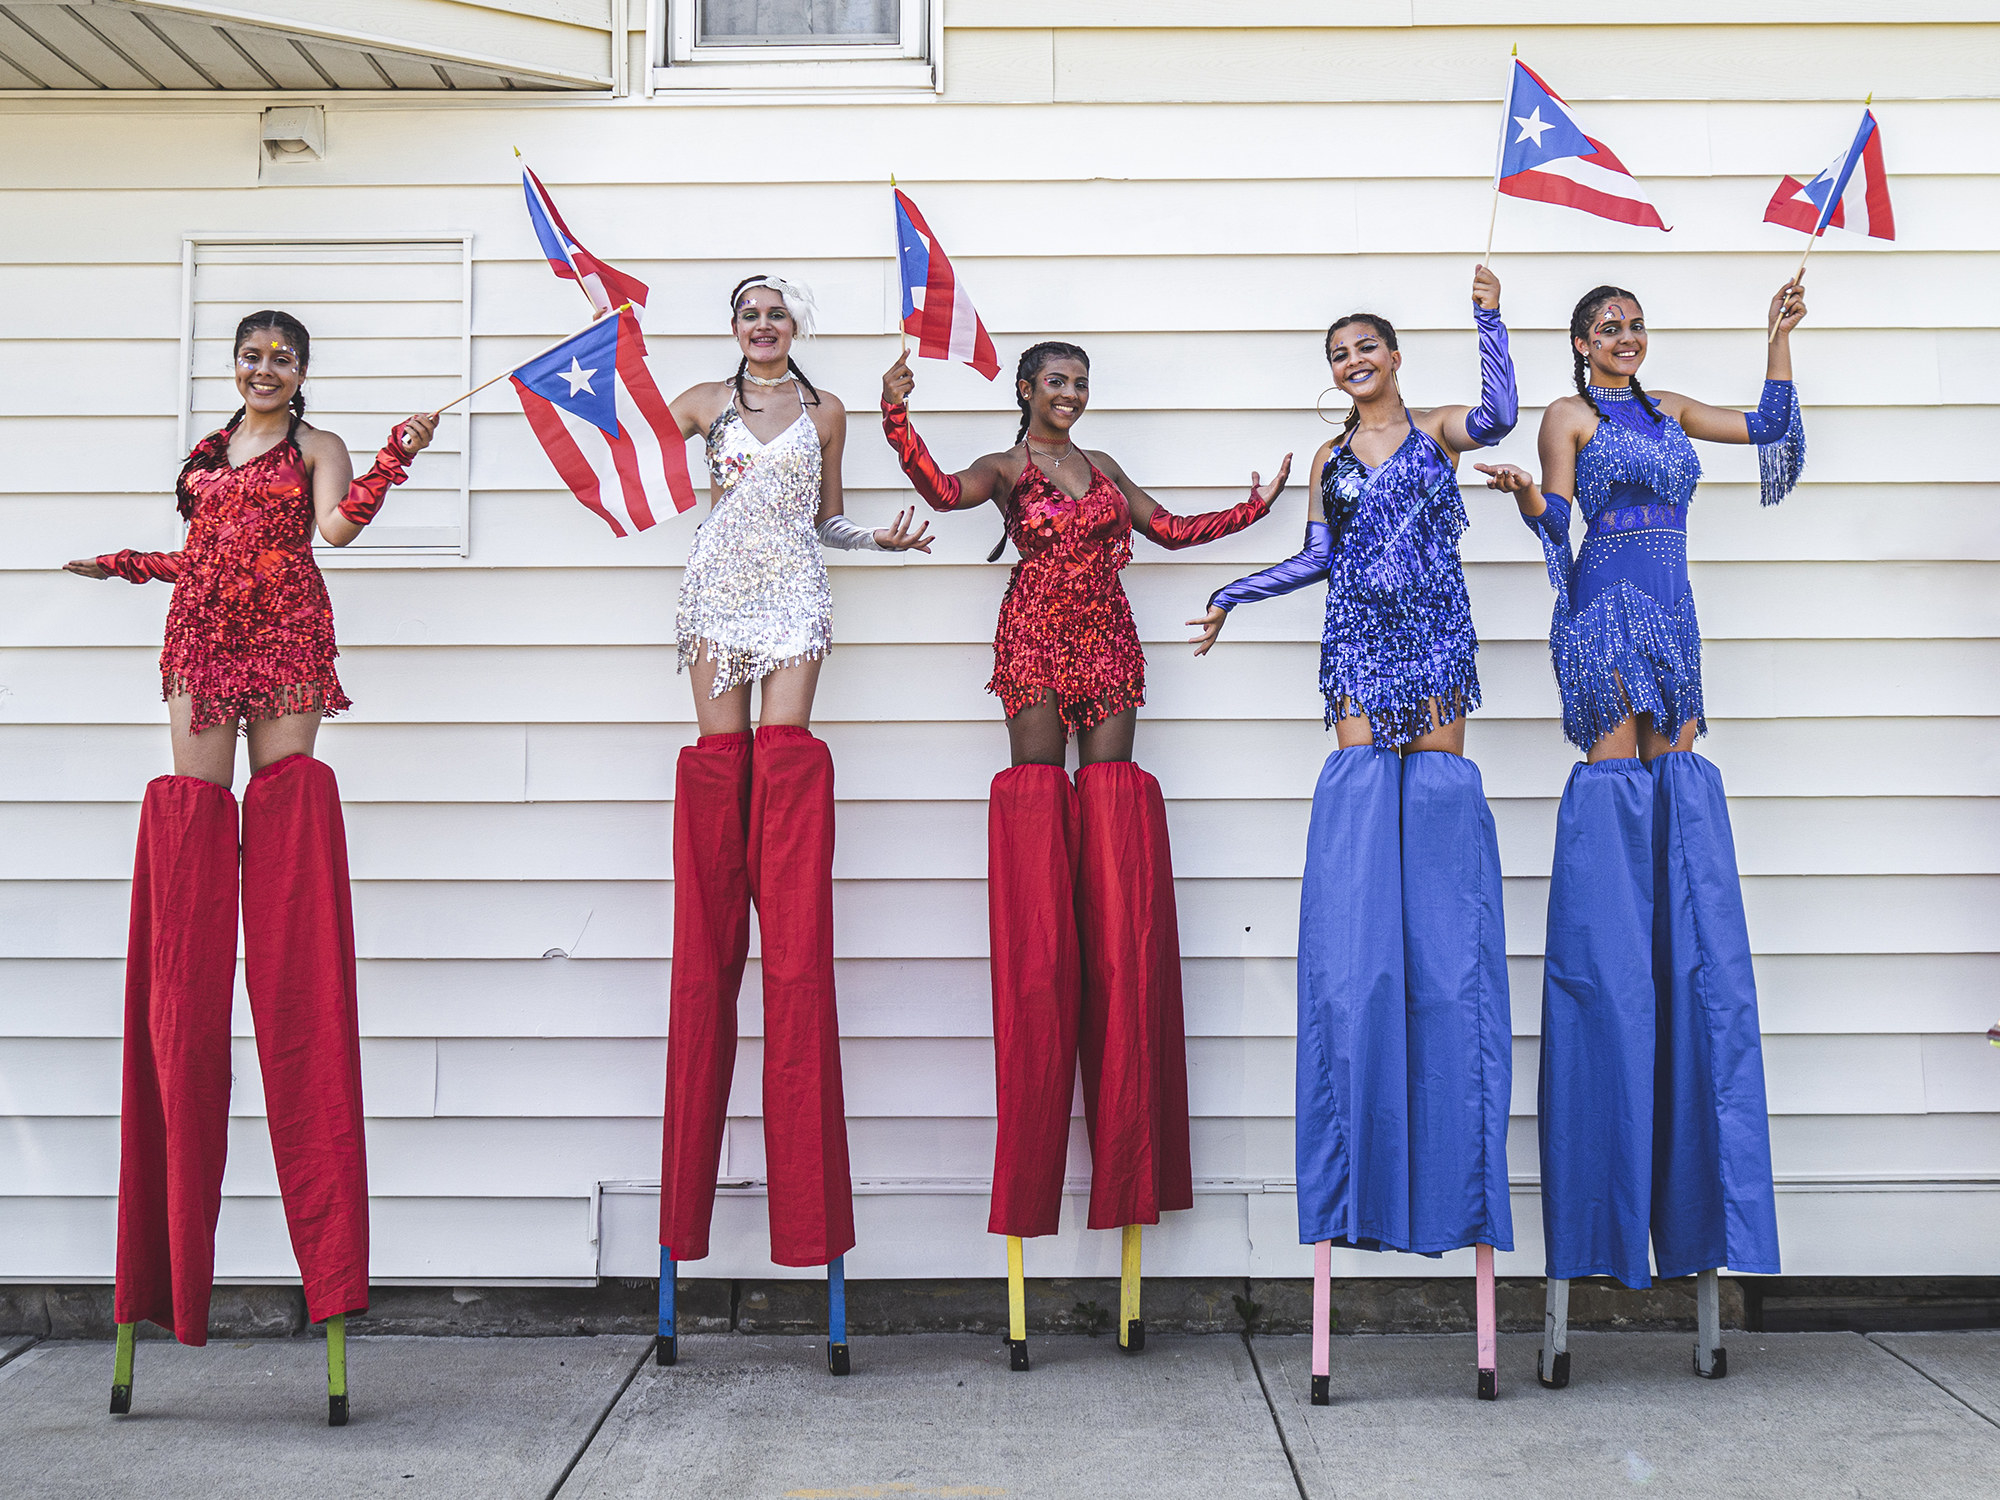 Five women on stilts holding Puerto Rican flags